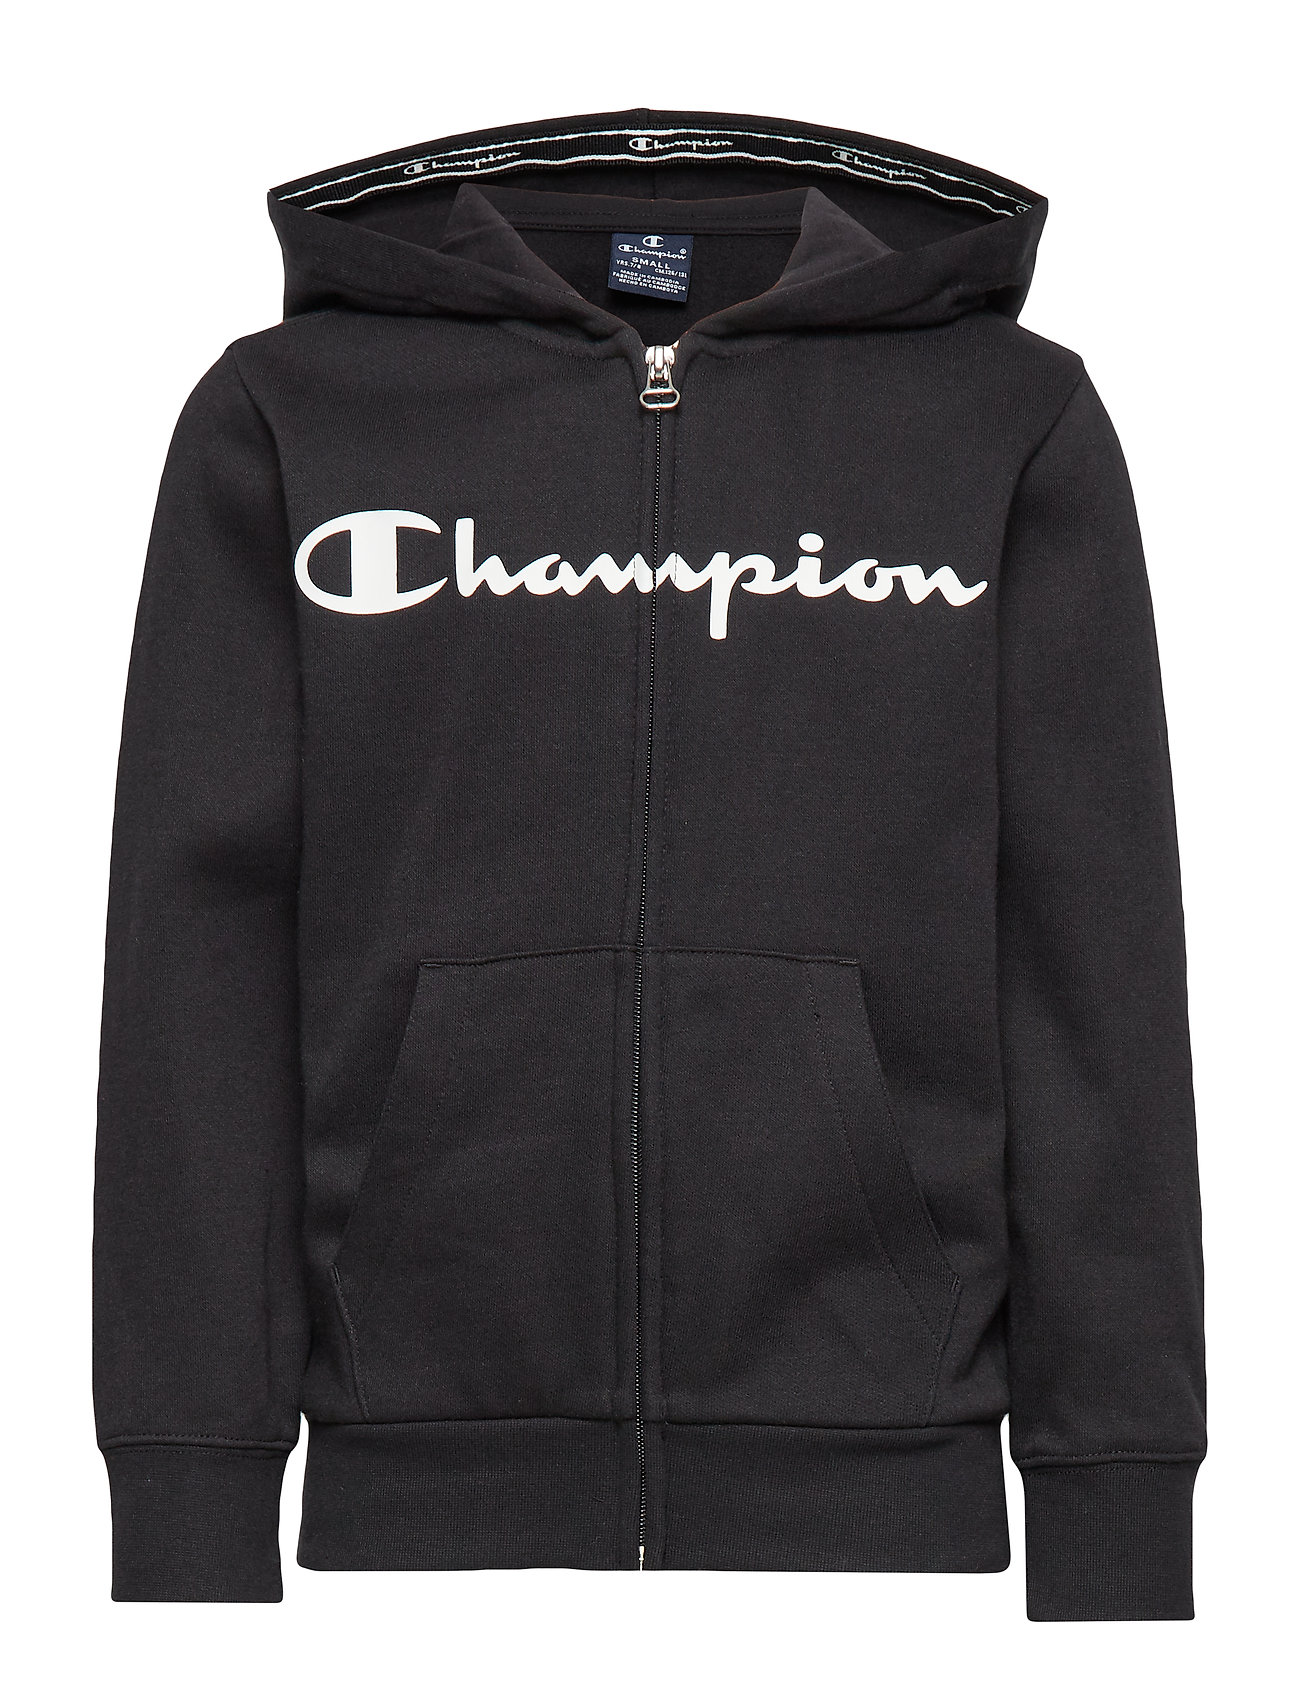 hooded full zip champion